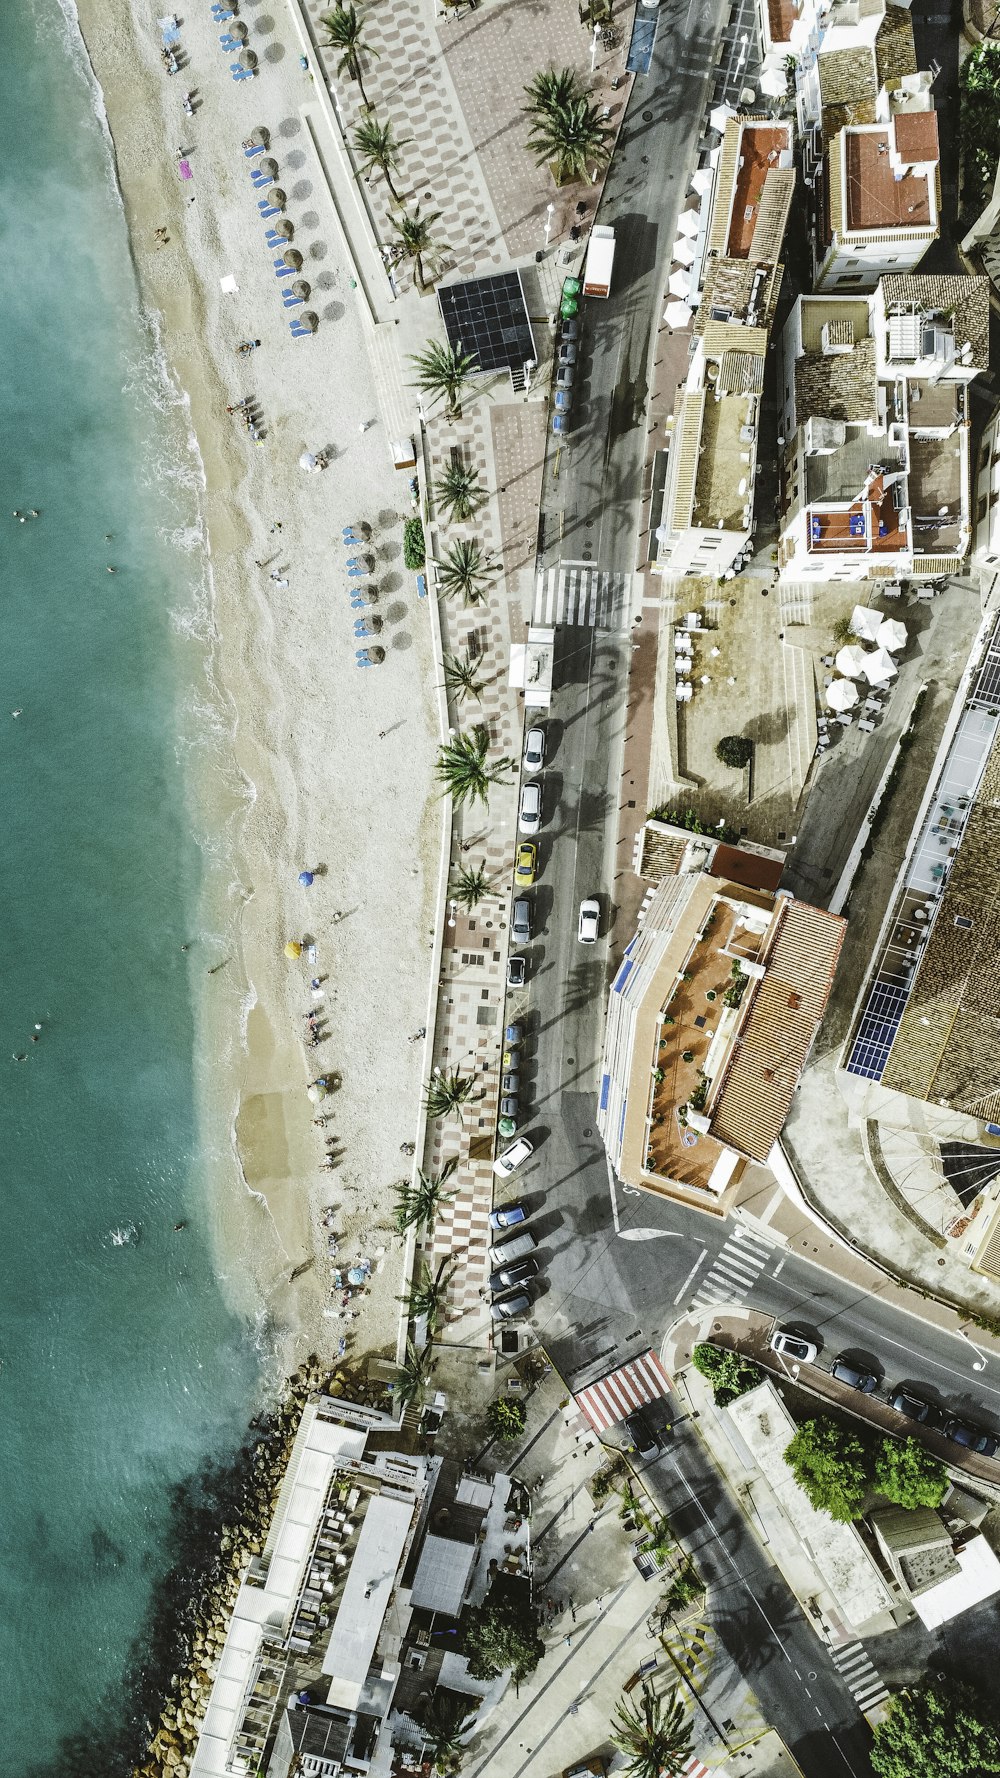 an aerial view of a beach and the ocean